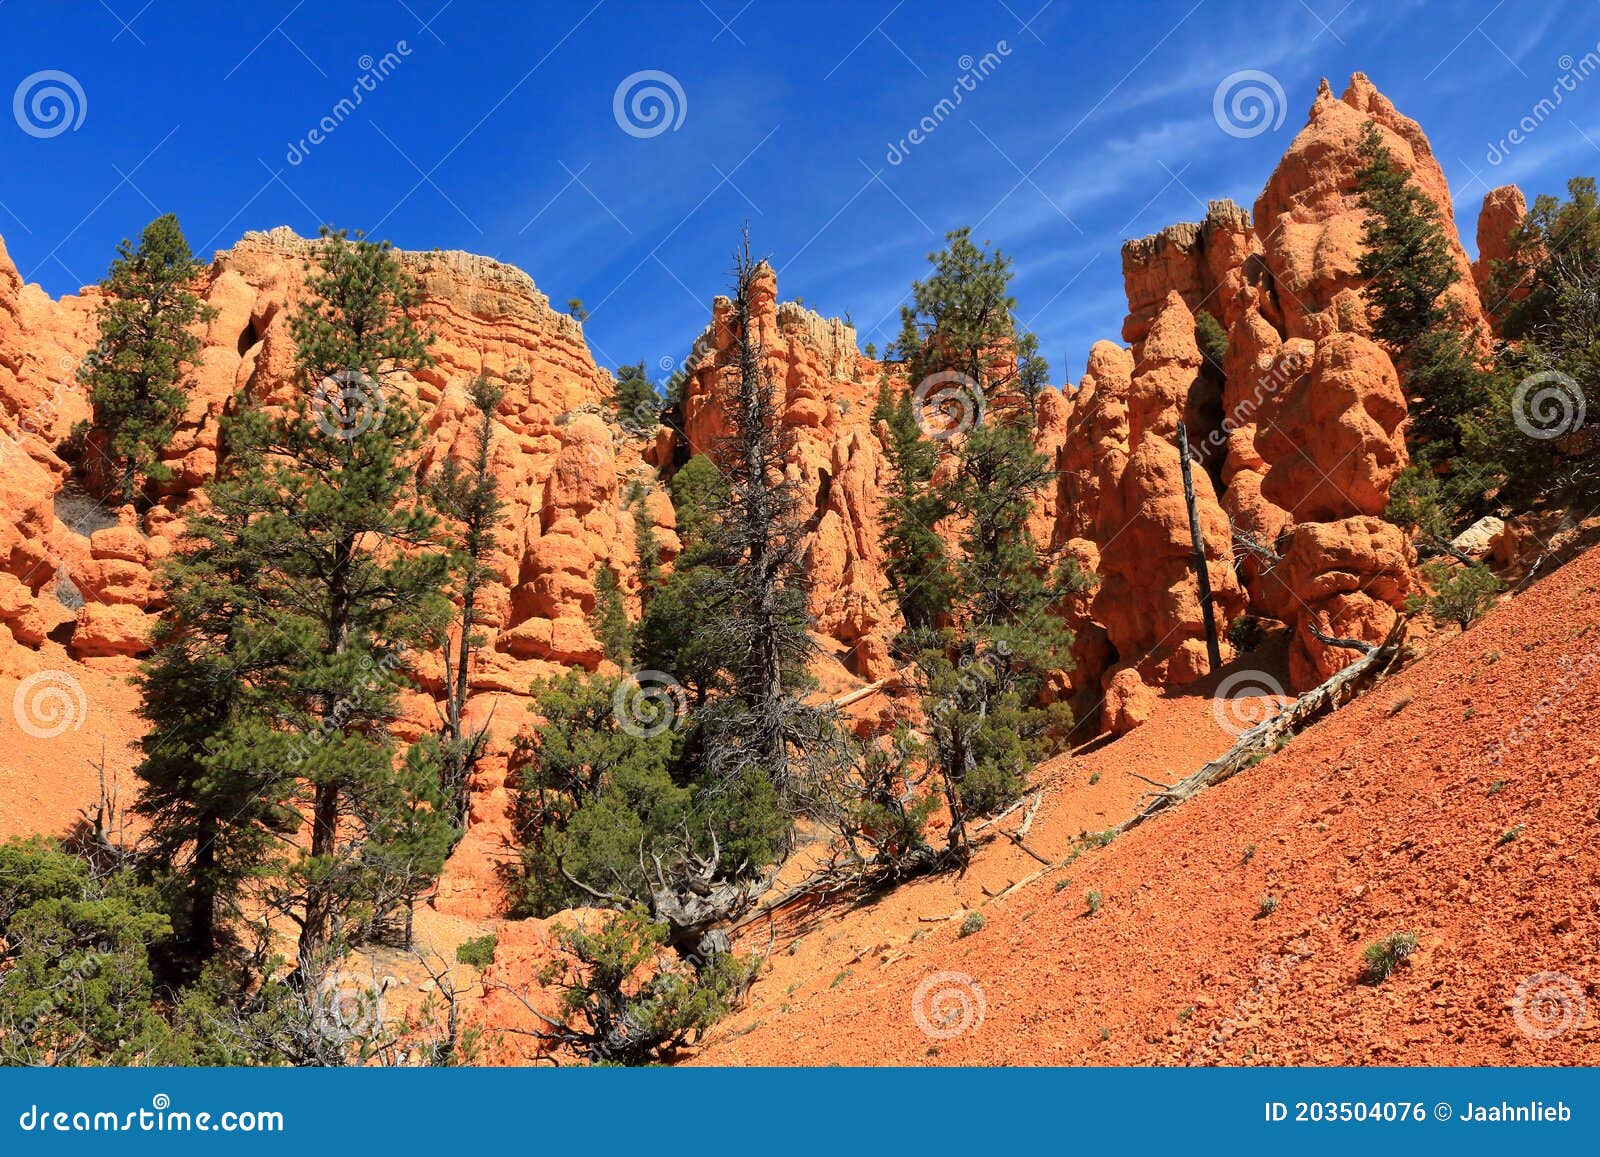 Sandstone Hoodoos And Bristlecone Pines In Southwest Desert Landscape Red Rock State Park Utah Usa Stock Photo - Image Of Garden Desert 203504076